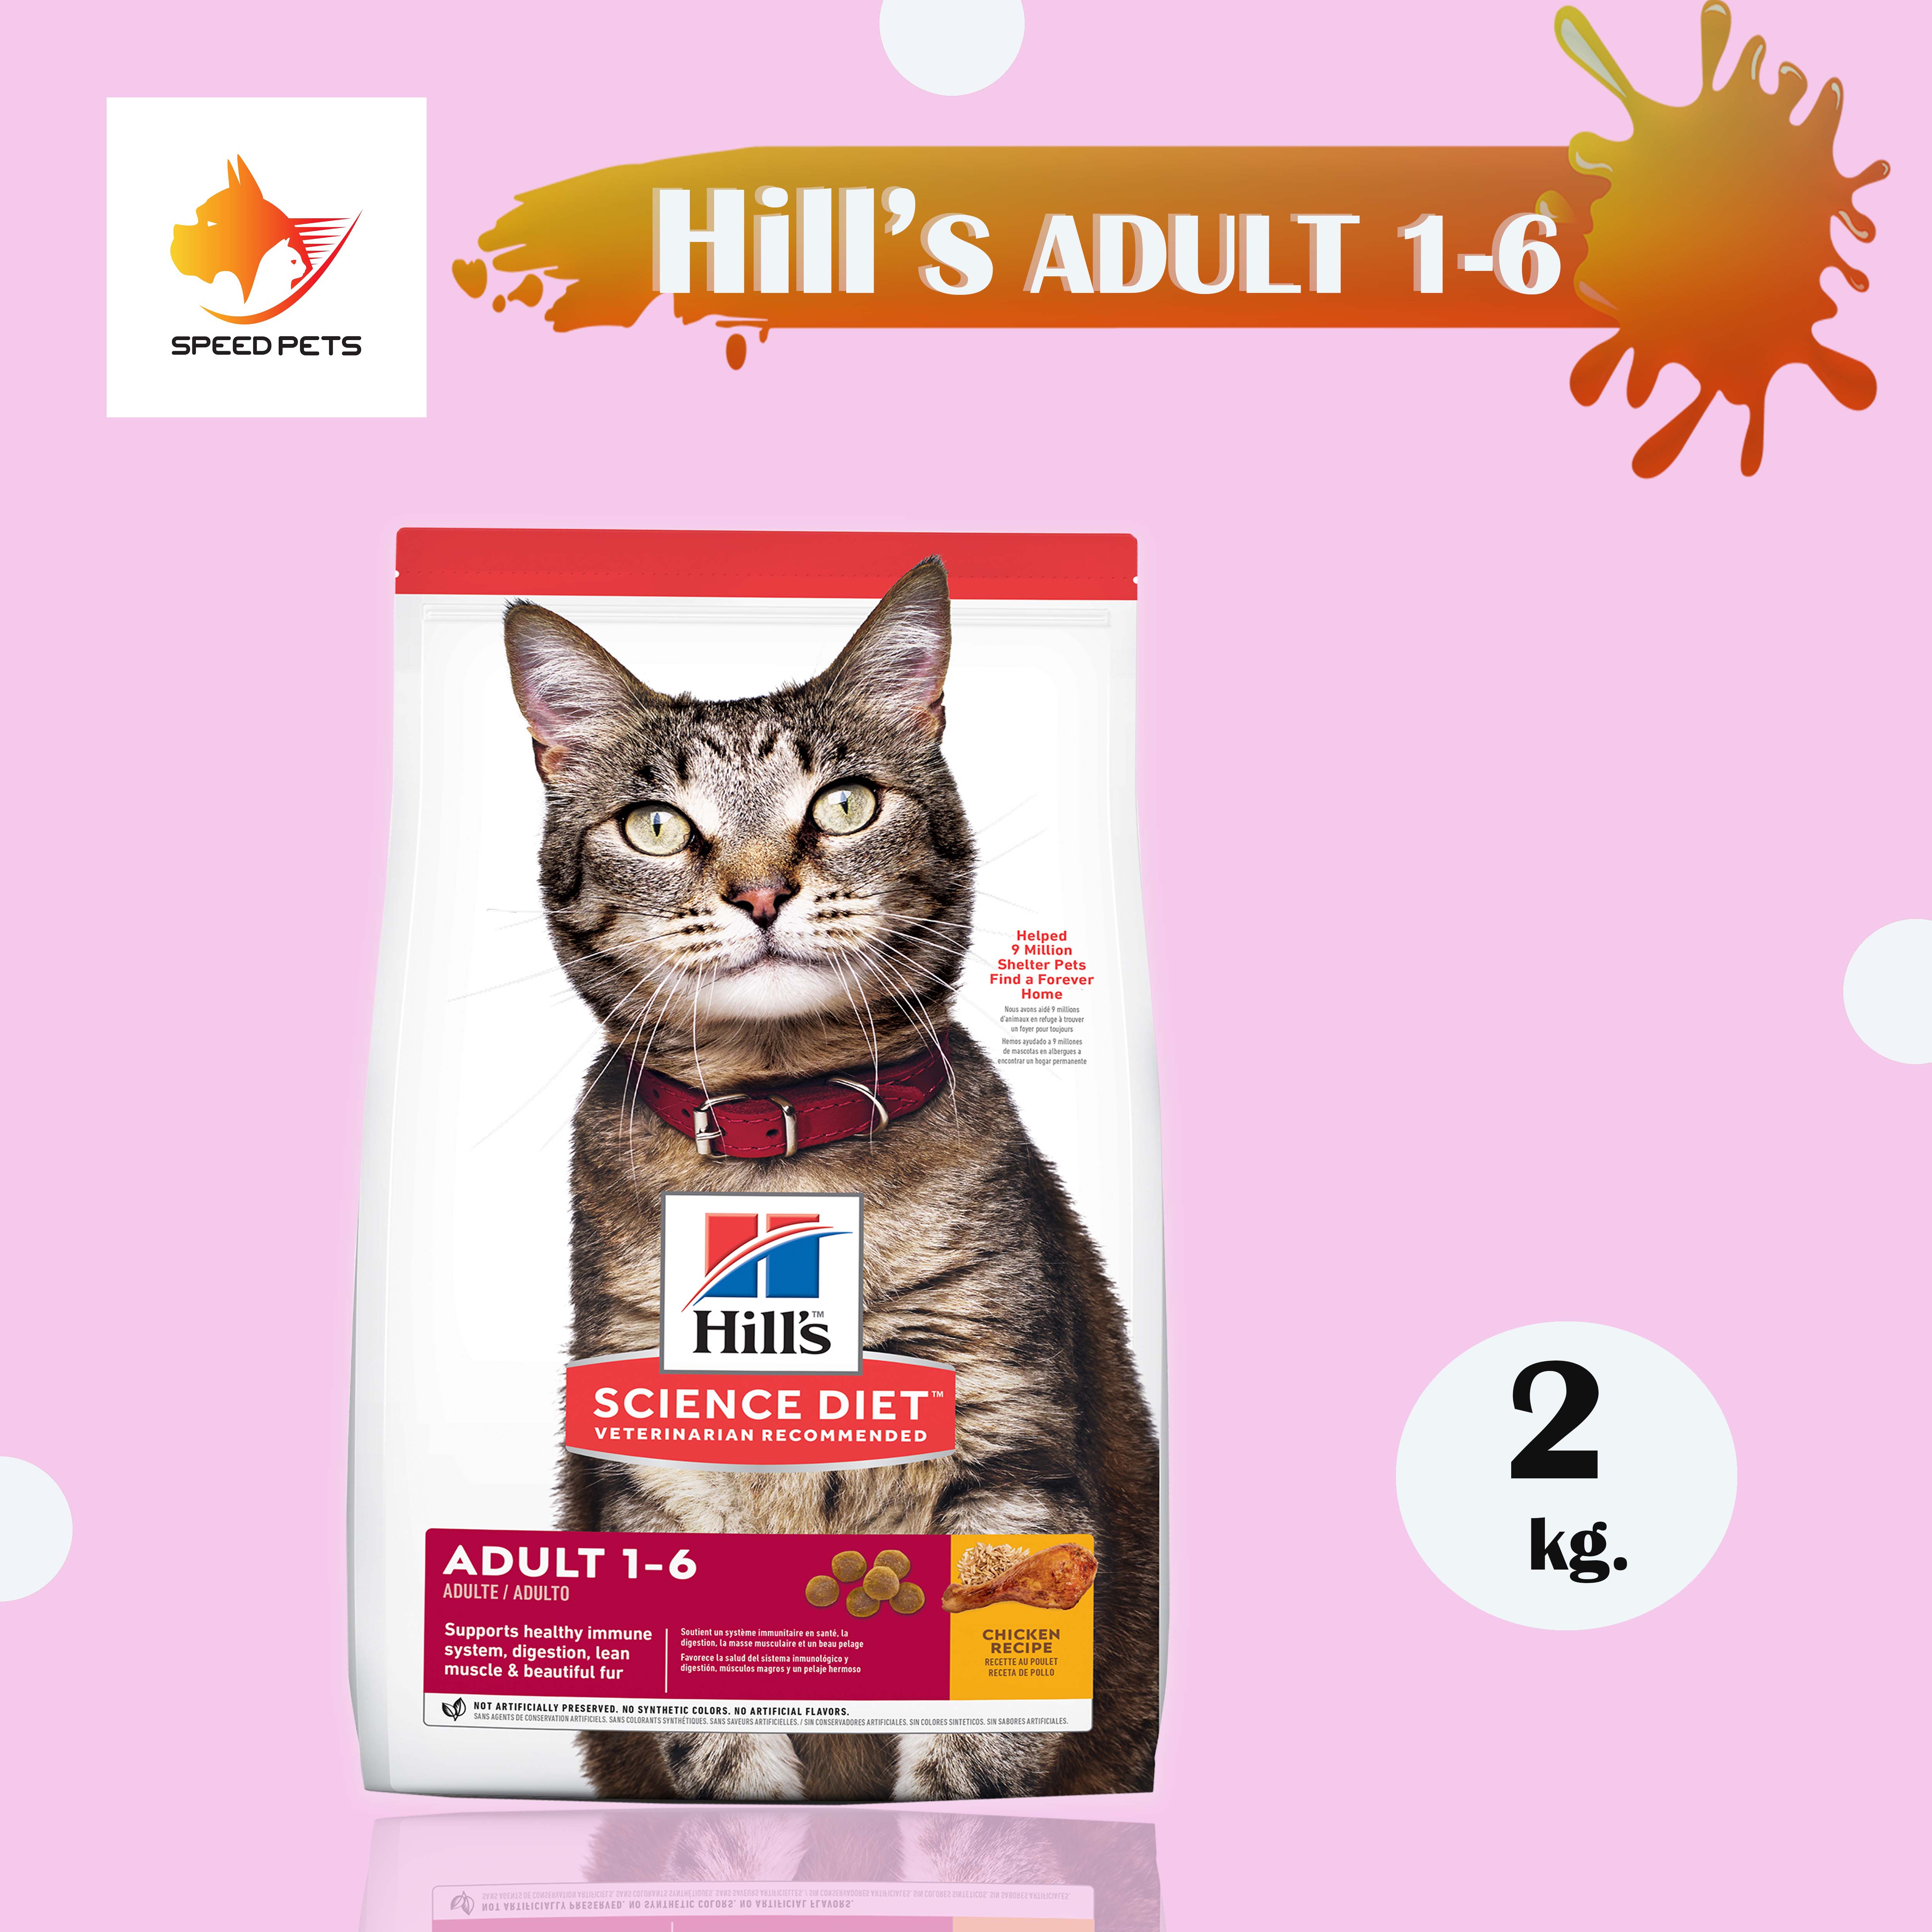 Hill's Science Diet Feline adult 1-6 Cat Food ฮิลล์ อาหารแมว อาหารแมวโต อายุ 1-6 ปี ขนาด 2 kg